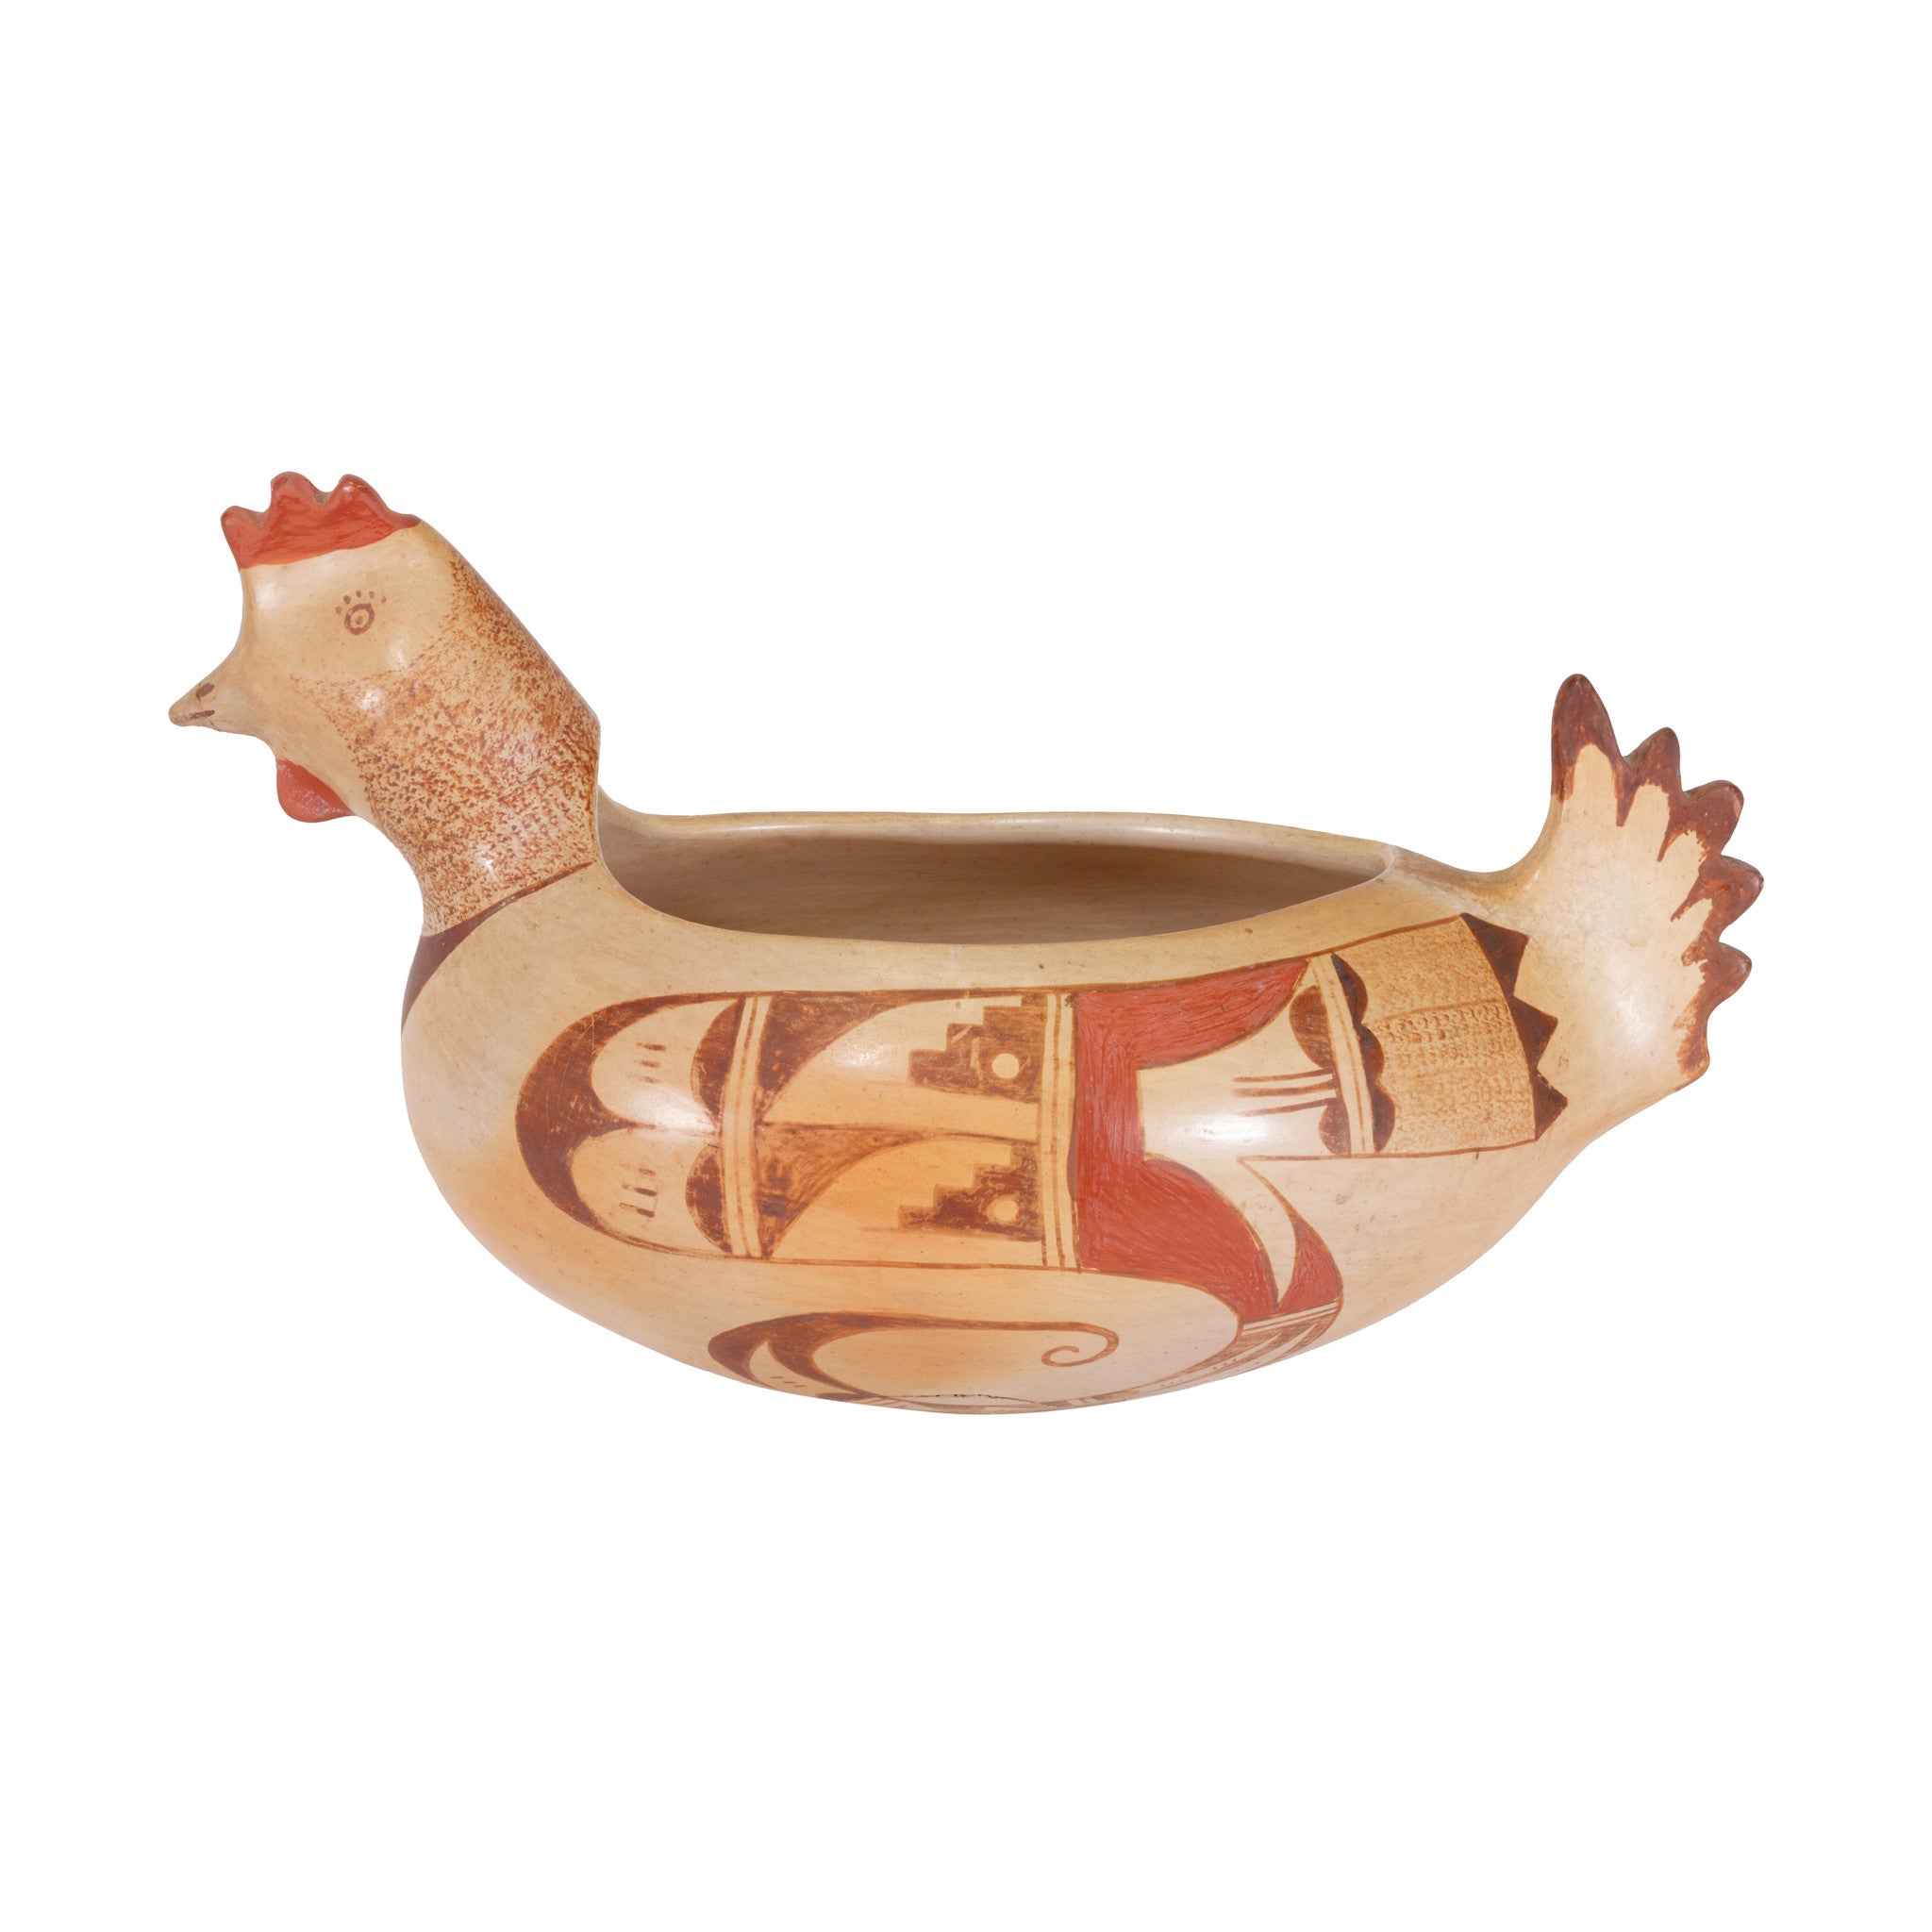 Hopi Pottery Chicken Bowl